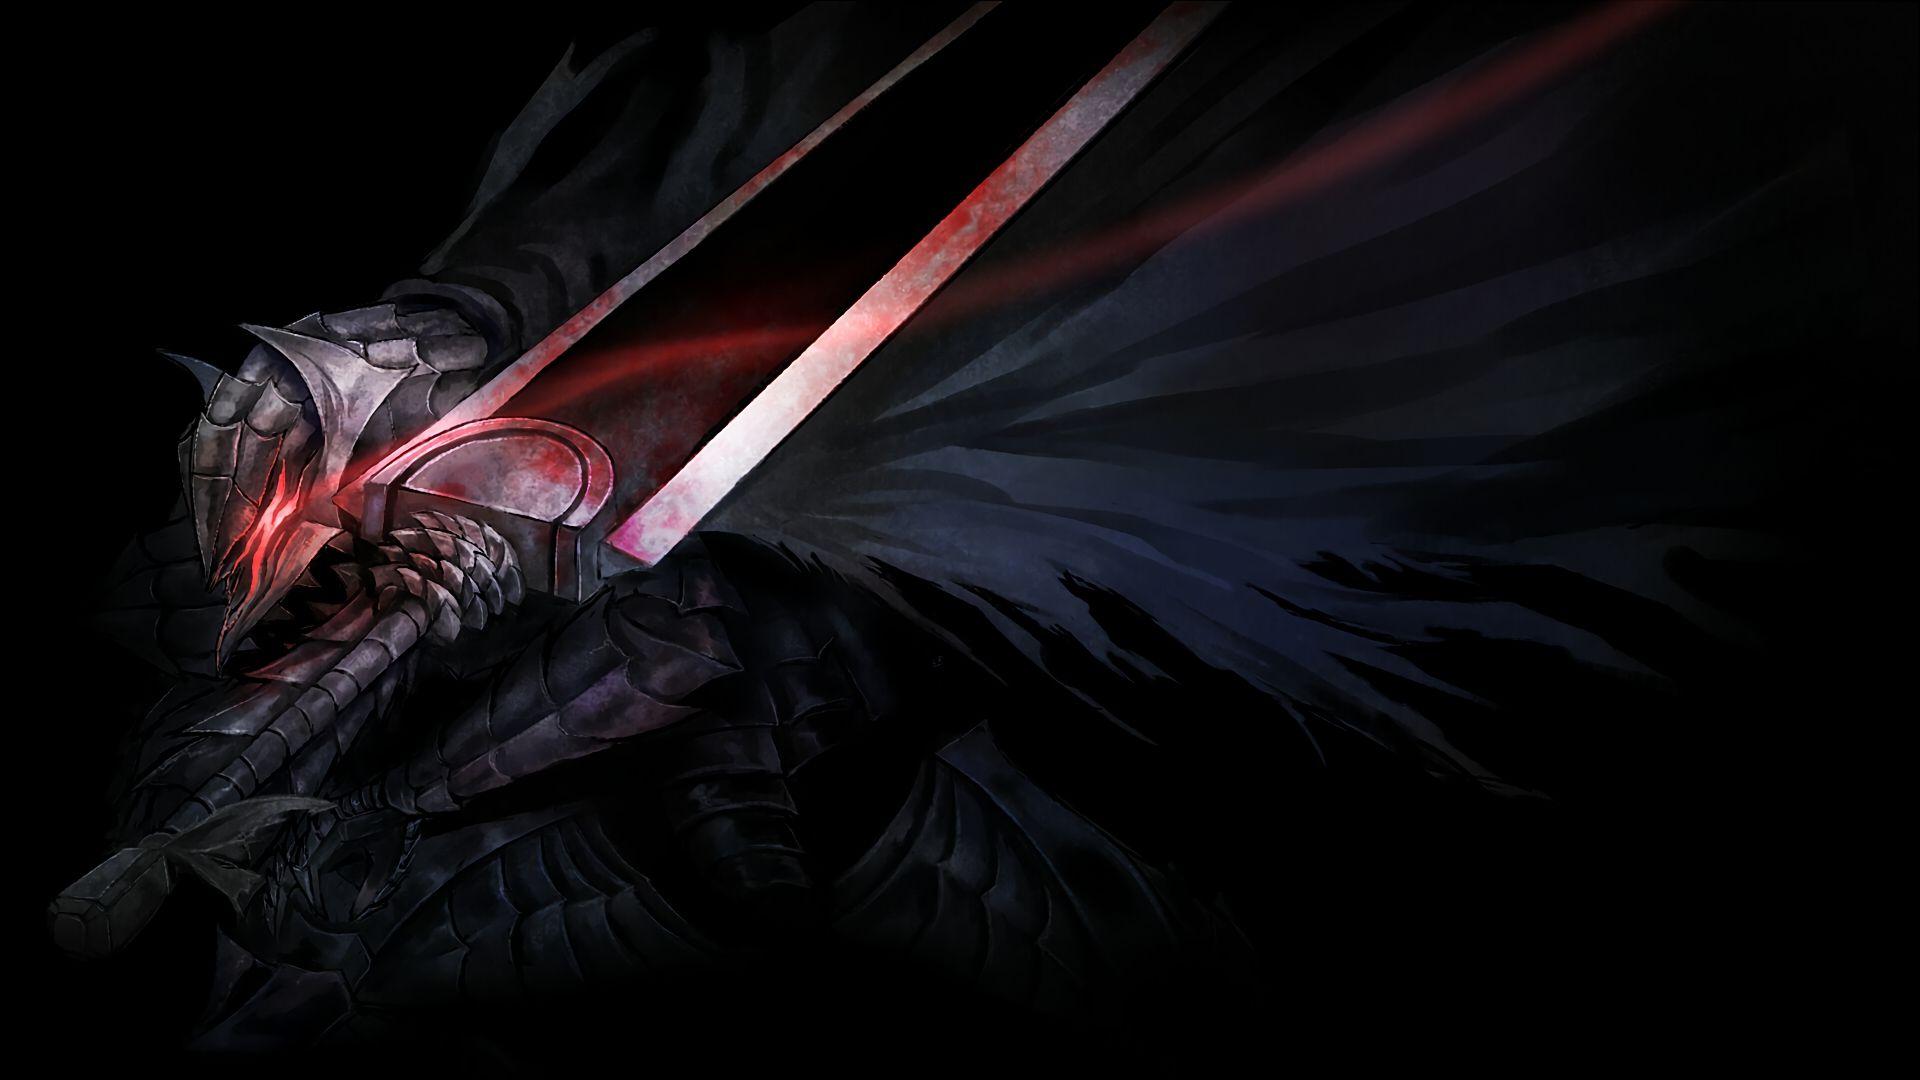 Guts Berserker Armor Sword Anime Wallpaper